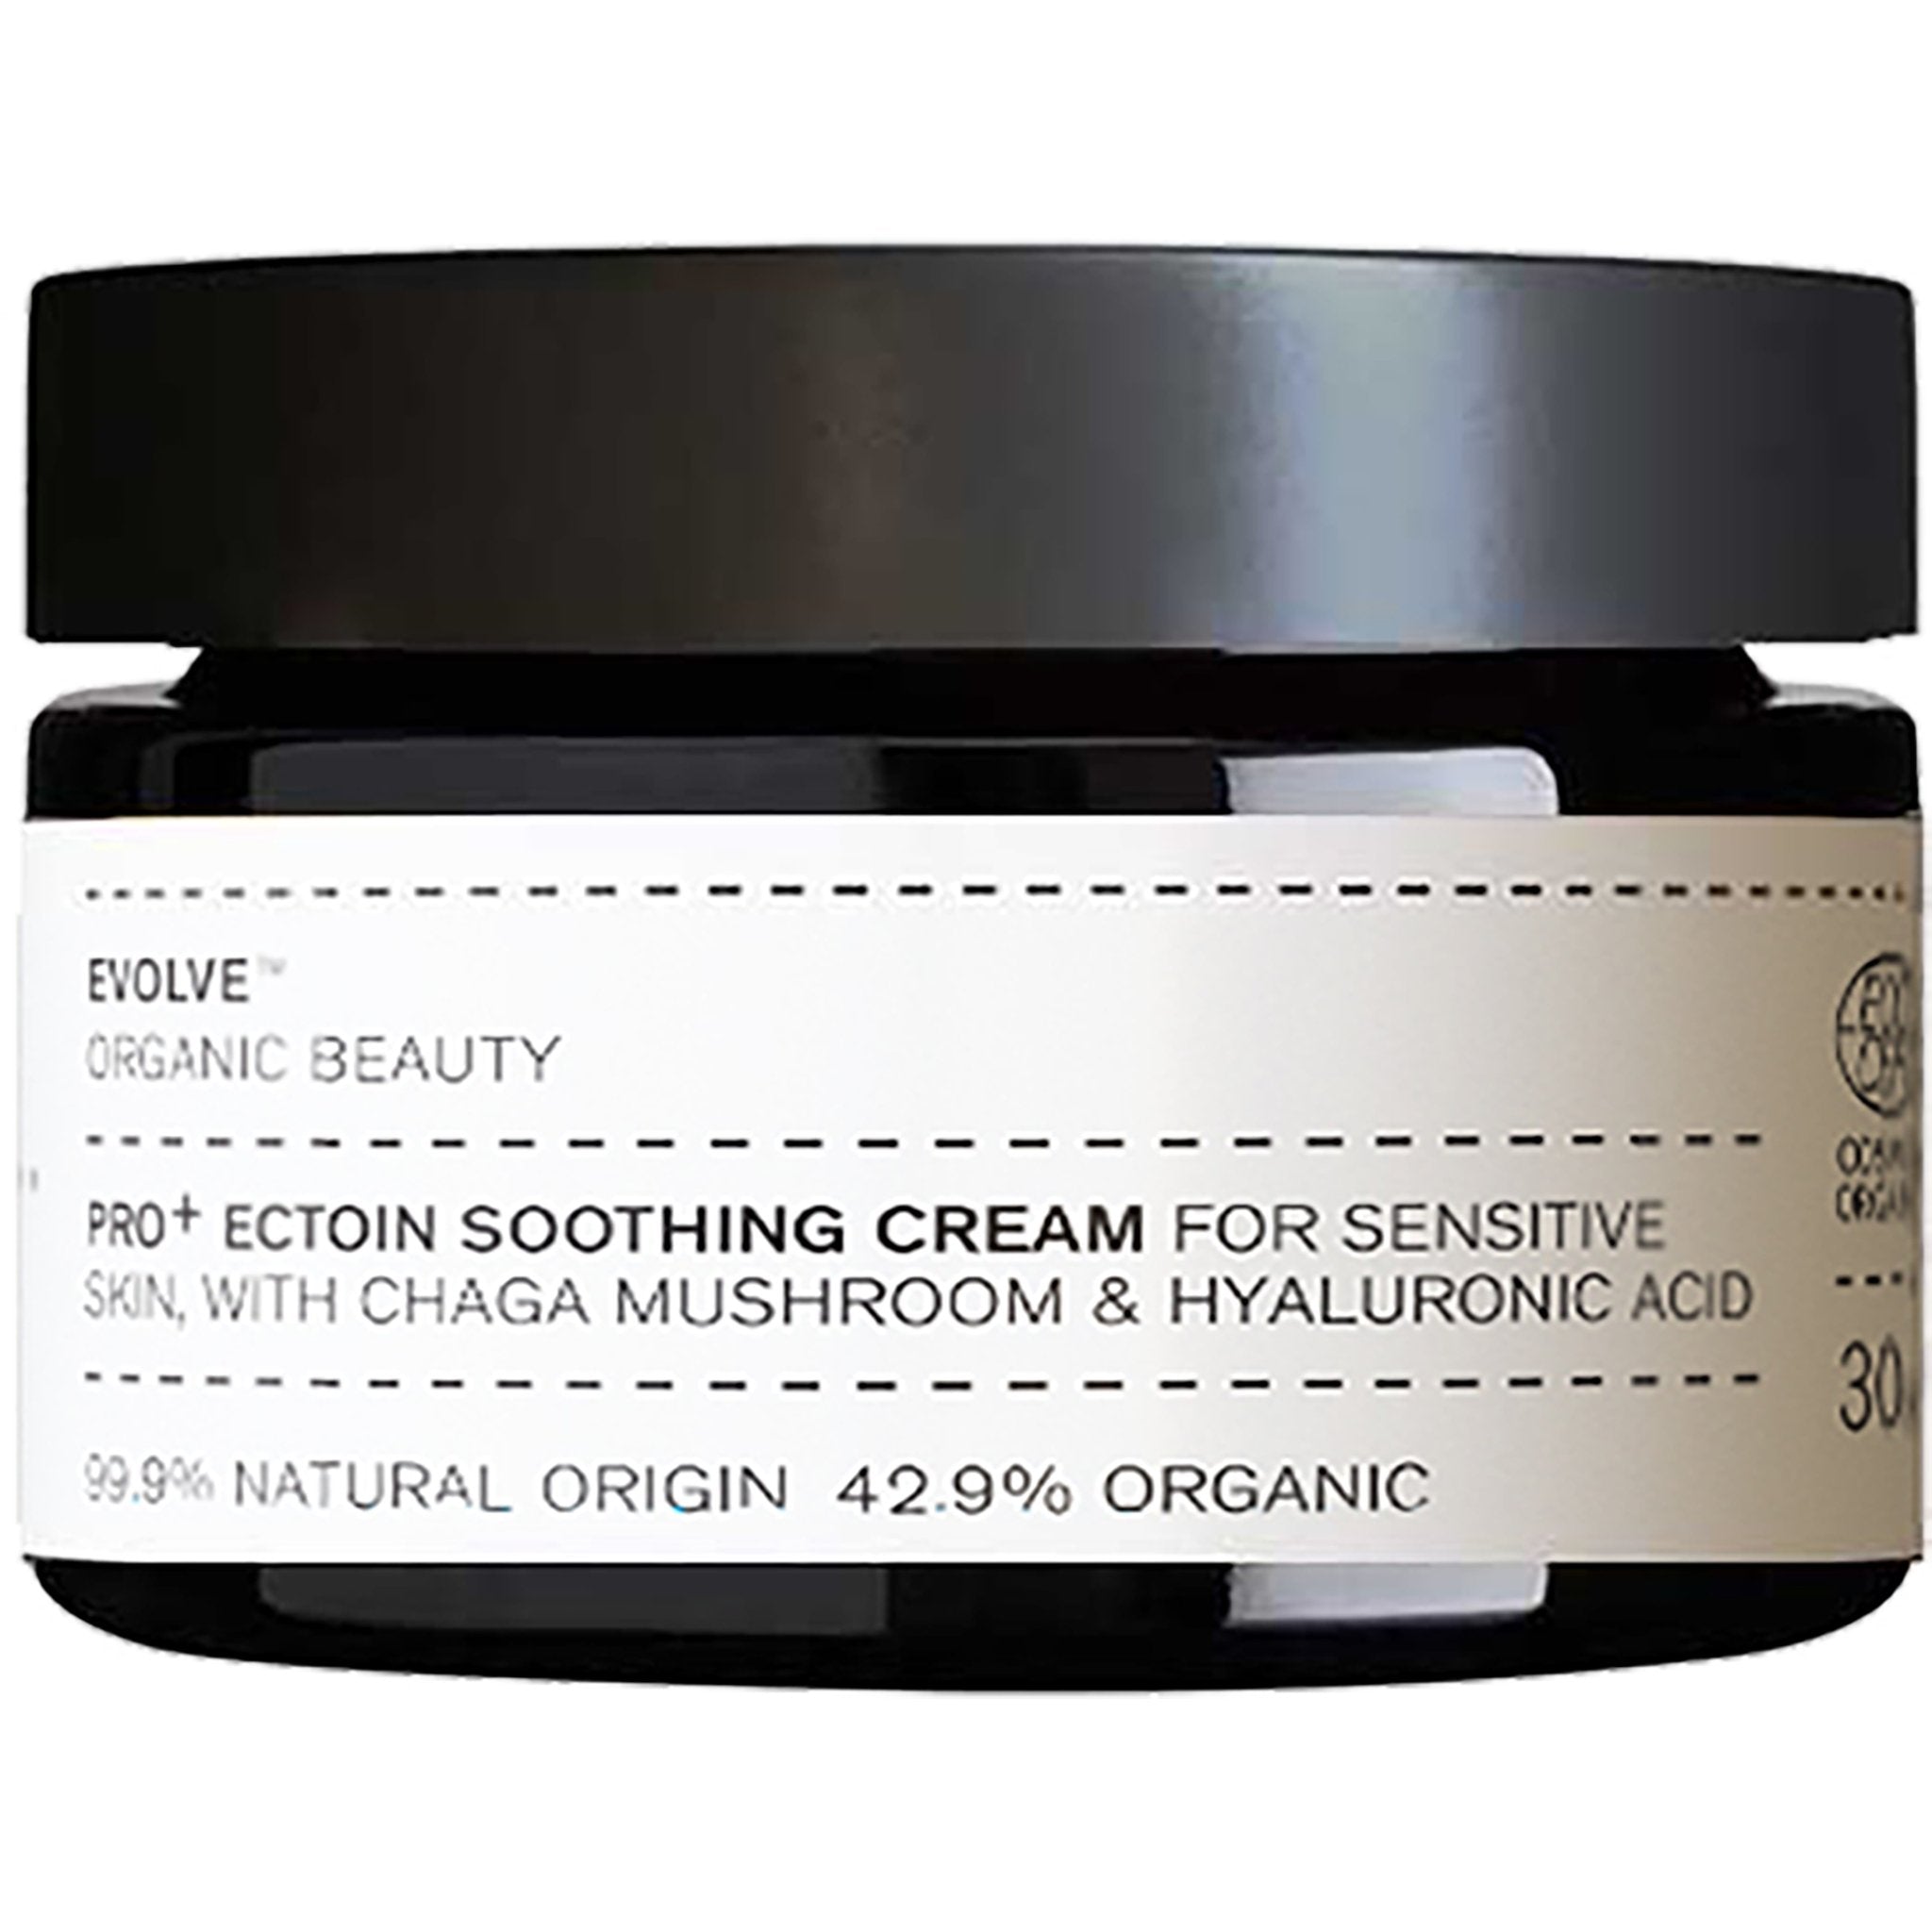 Pro+ Ecton Soothing Cream - mypure.co.uk